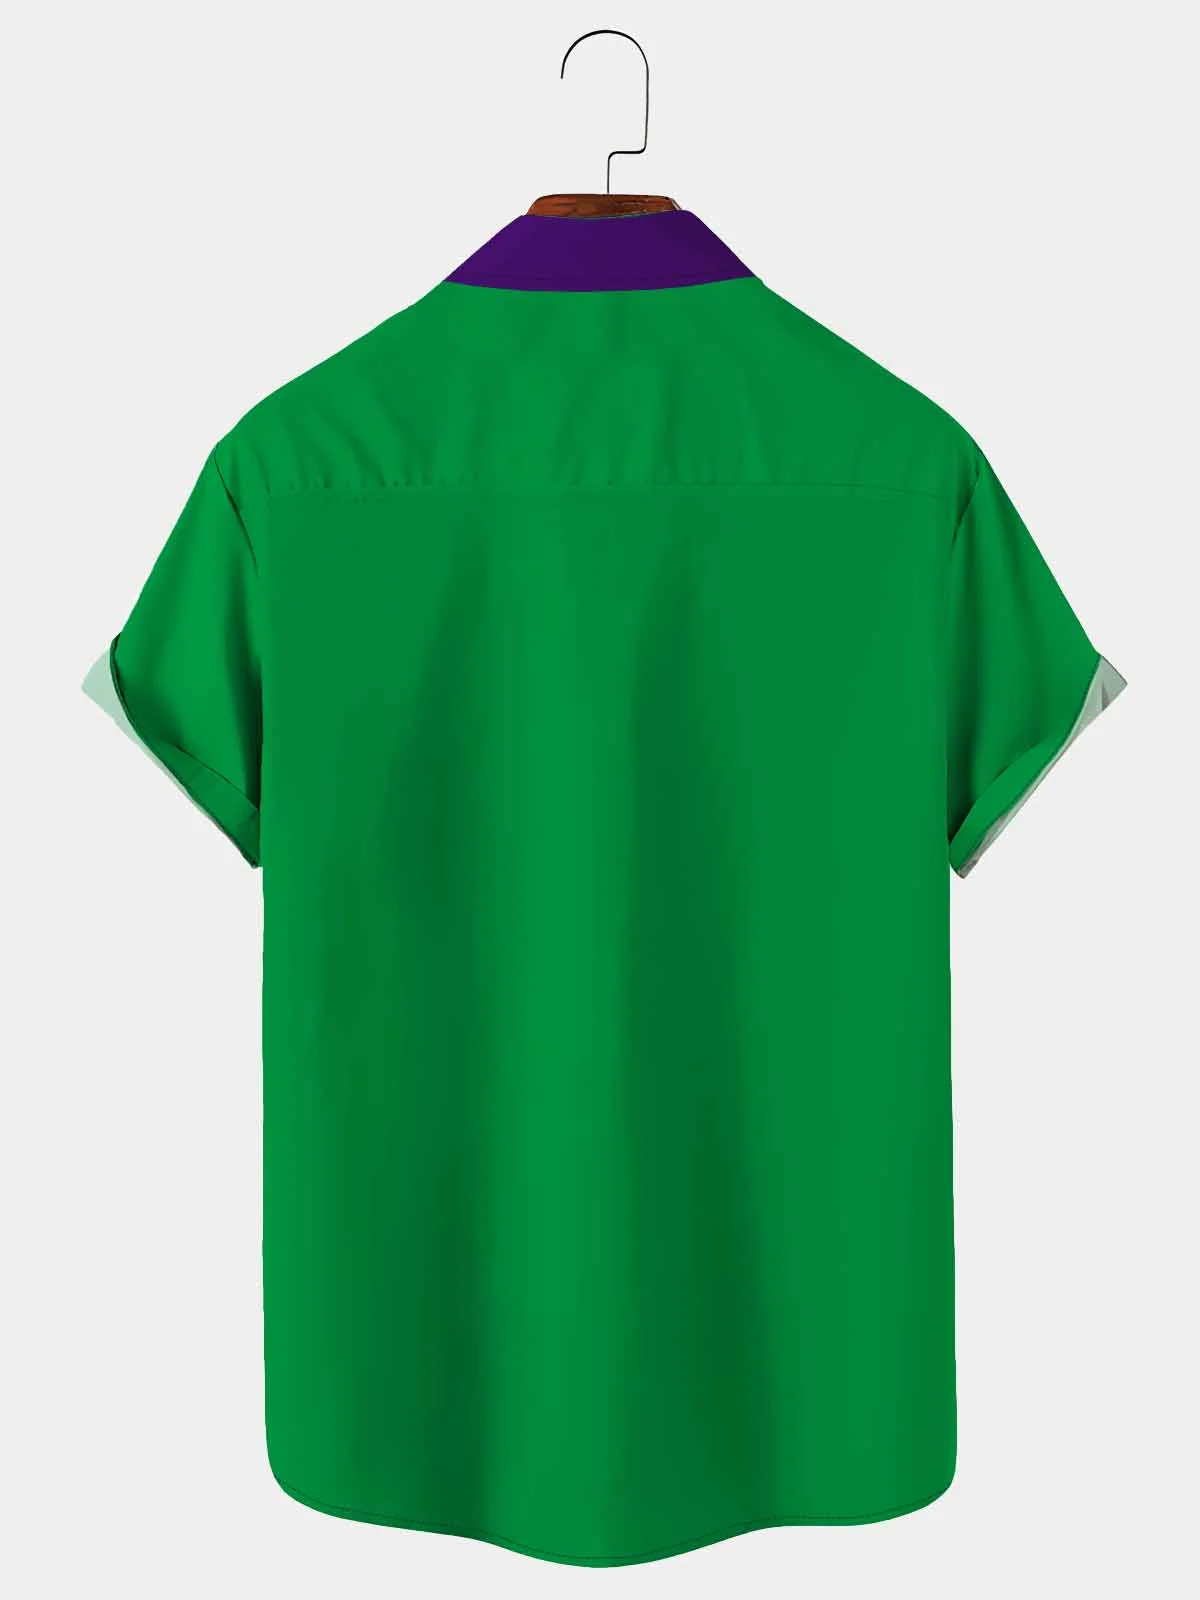 Royaura Holiday Carnival Contrast Bowling Structure Print Shirt Plus Size Holiday Shirt